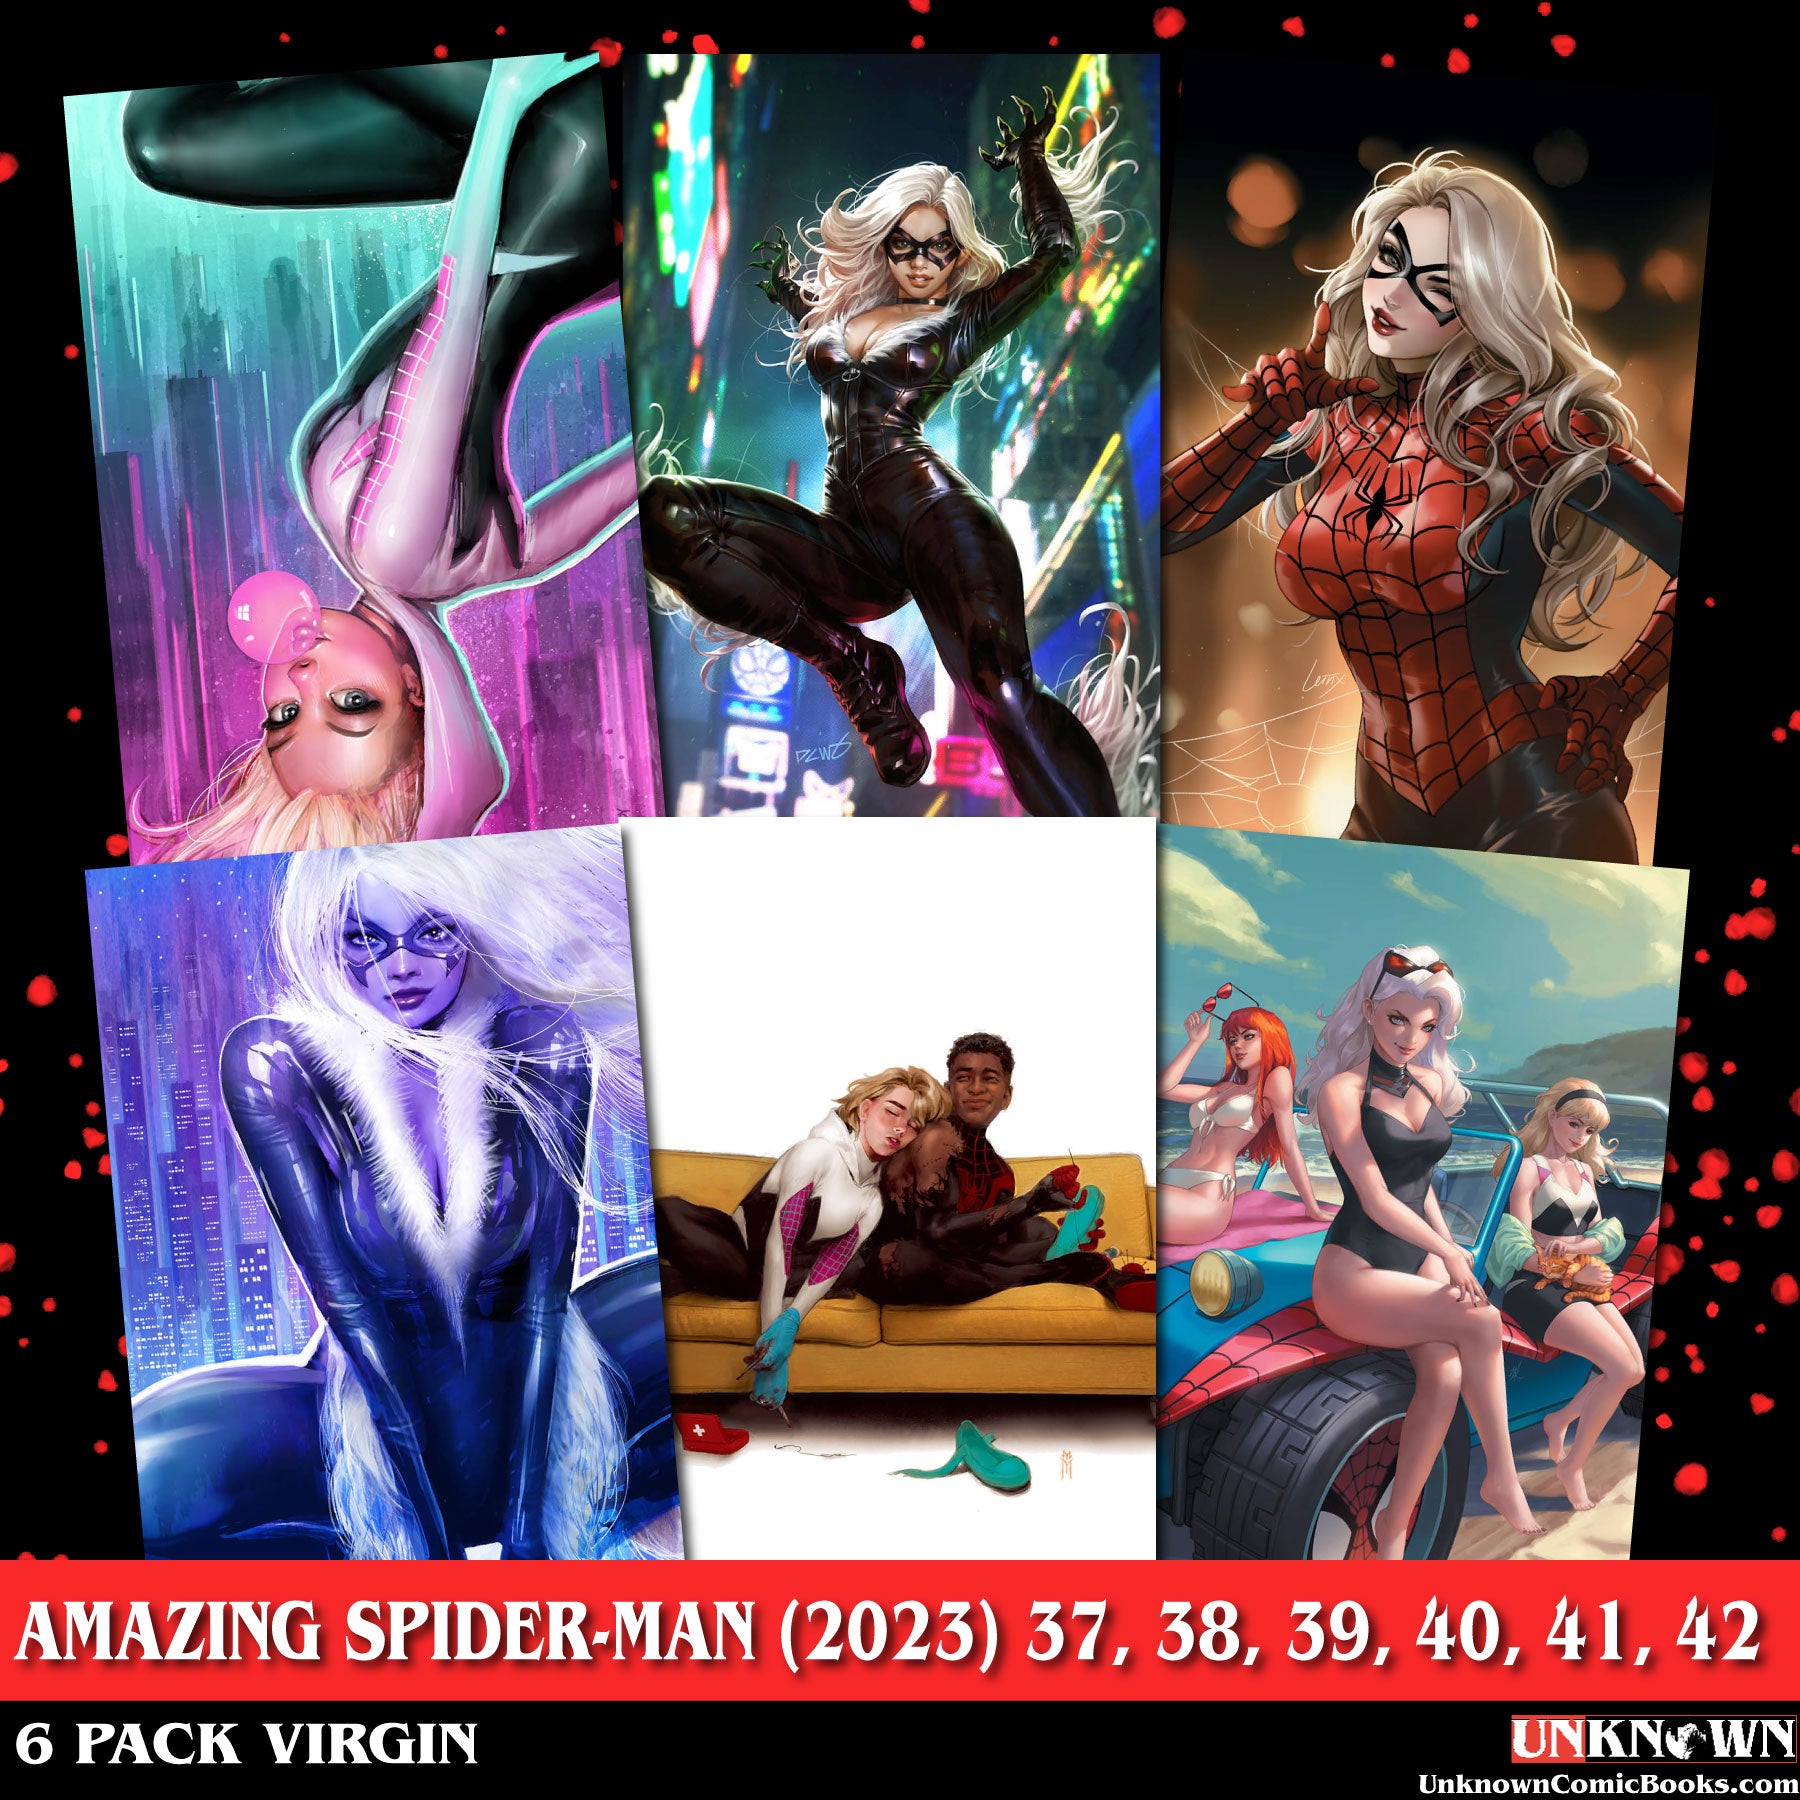 [6 PACK VIRGIN] AMAZING SPIDER-MAN (37-42) #37 #38 #39 #40 #41 #42 UNKNOWN COMICS EXCLUSIVE VIRGIN VAR (01/17/2024)